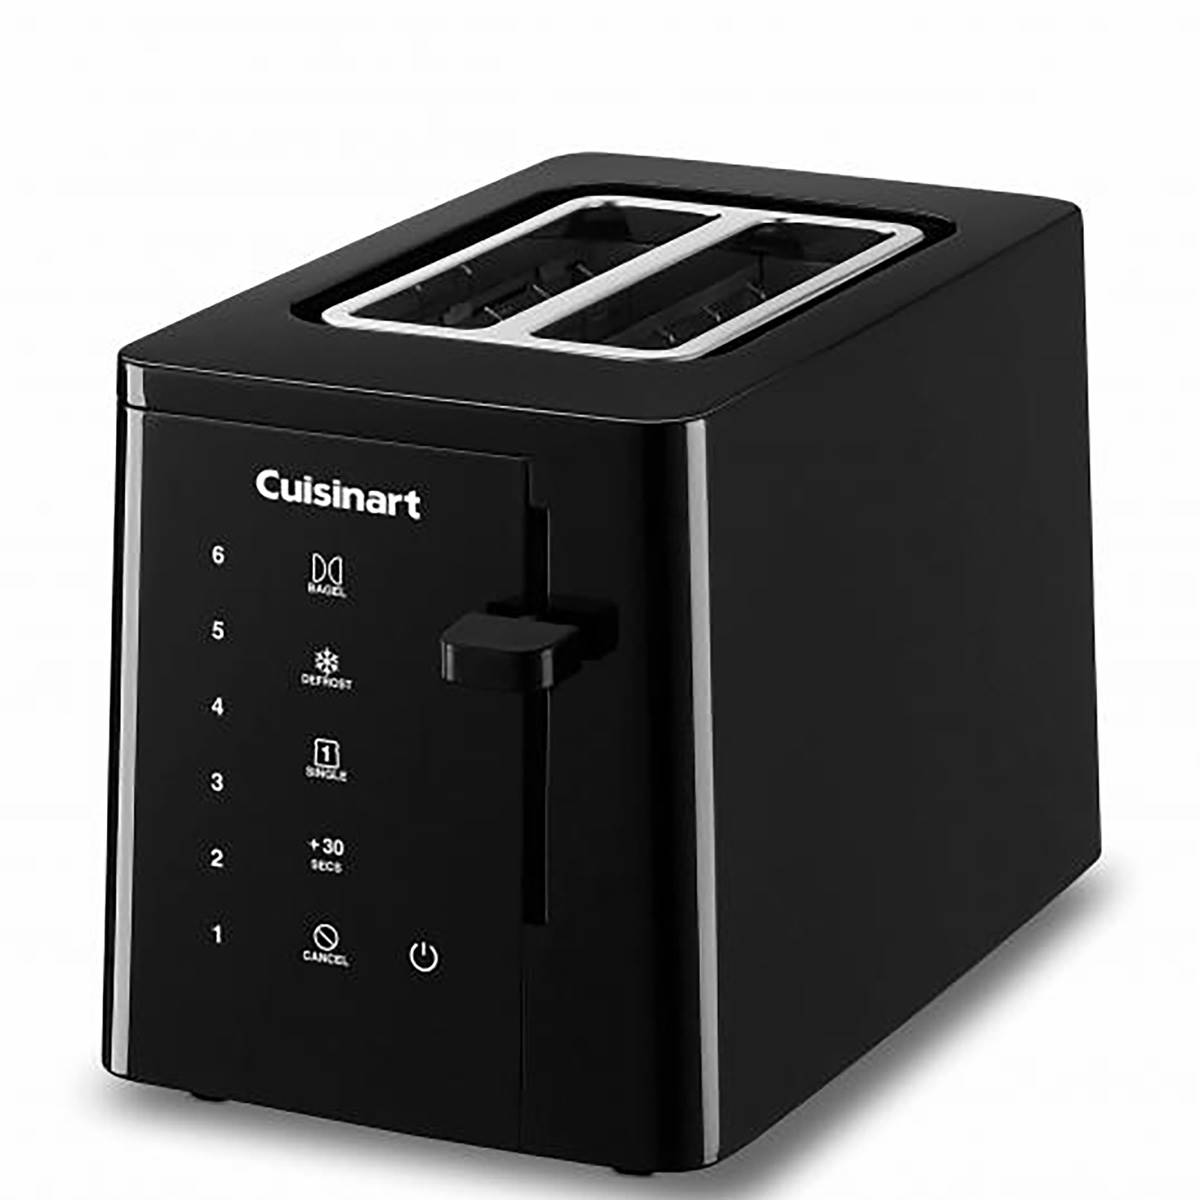 Cuisinart(R) 2-Slice Touchscreen Toaster